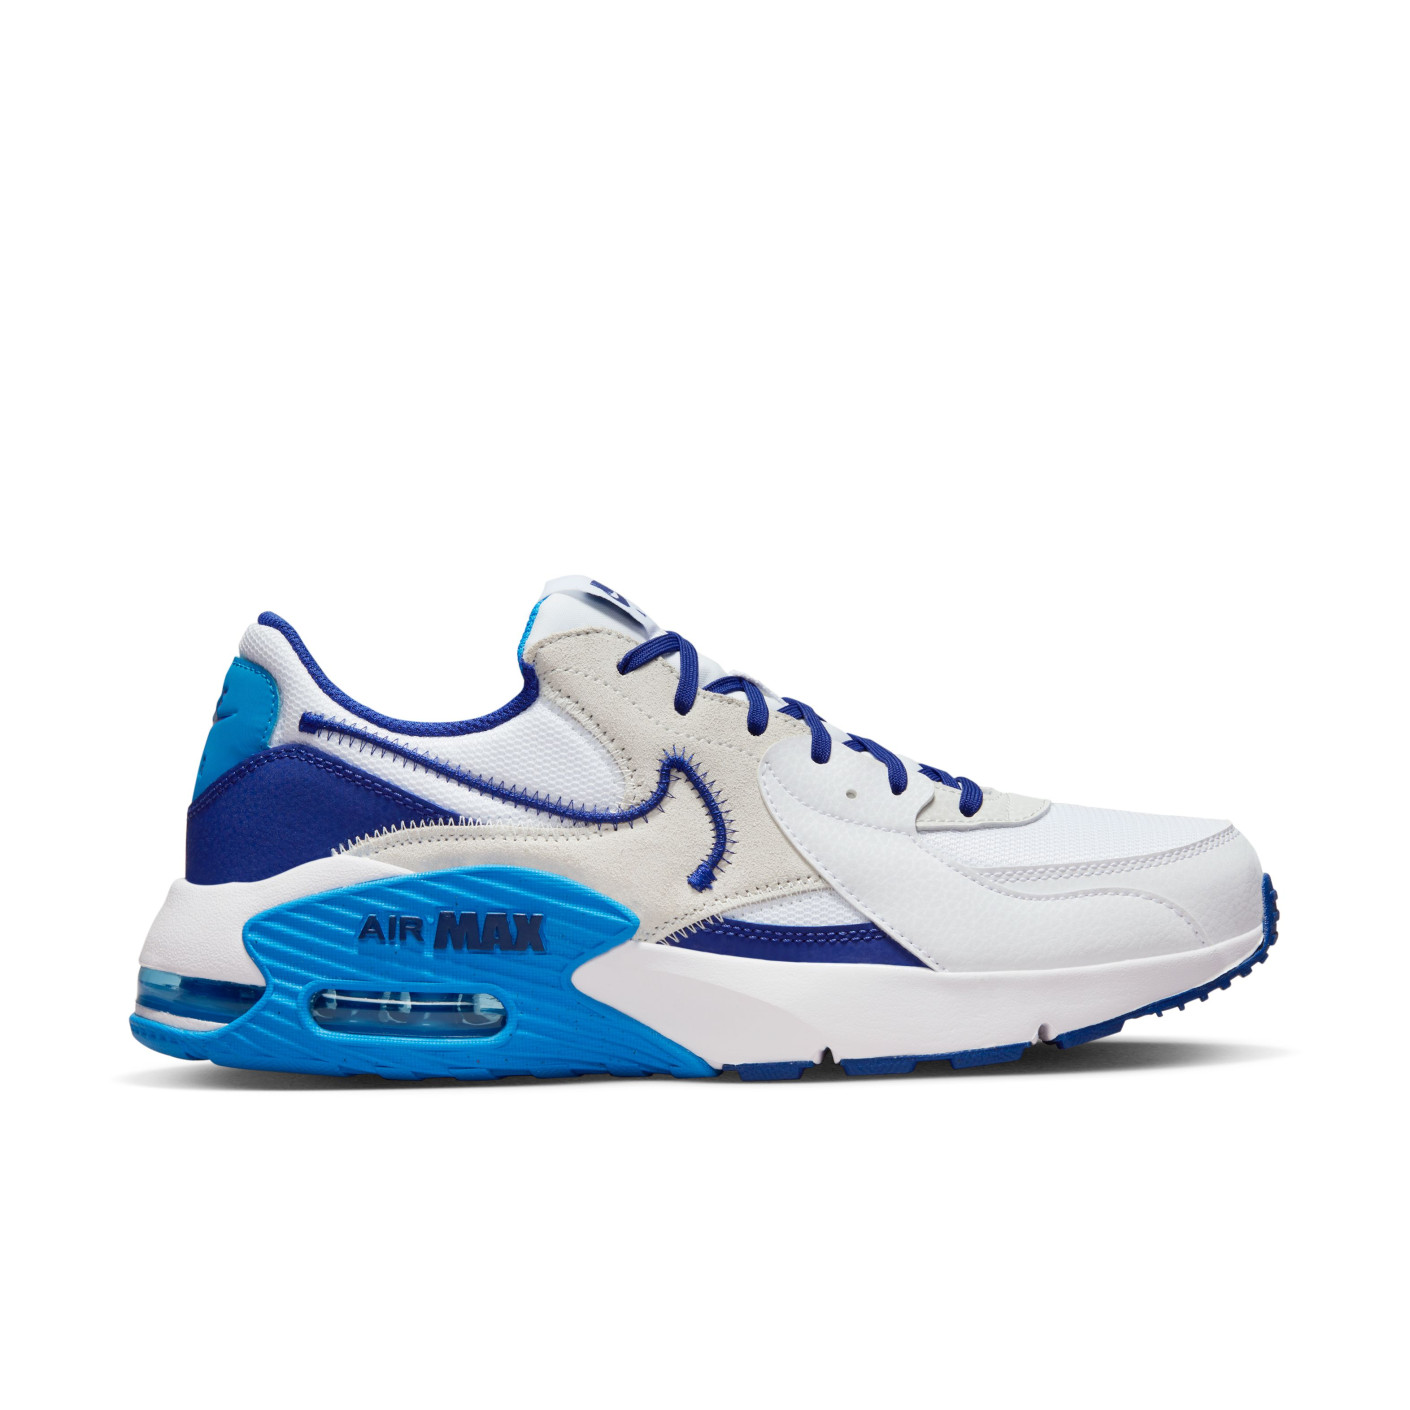 partij Omgeving uitbreiden Nike Air Max Excee Sneakers Wit Donkerblauw Blauw